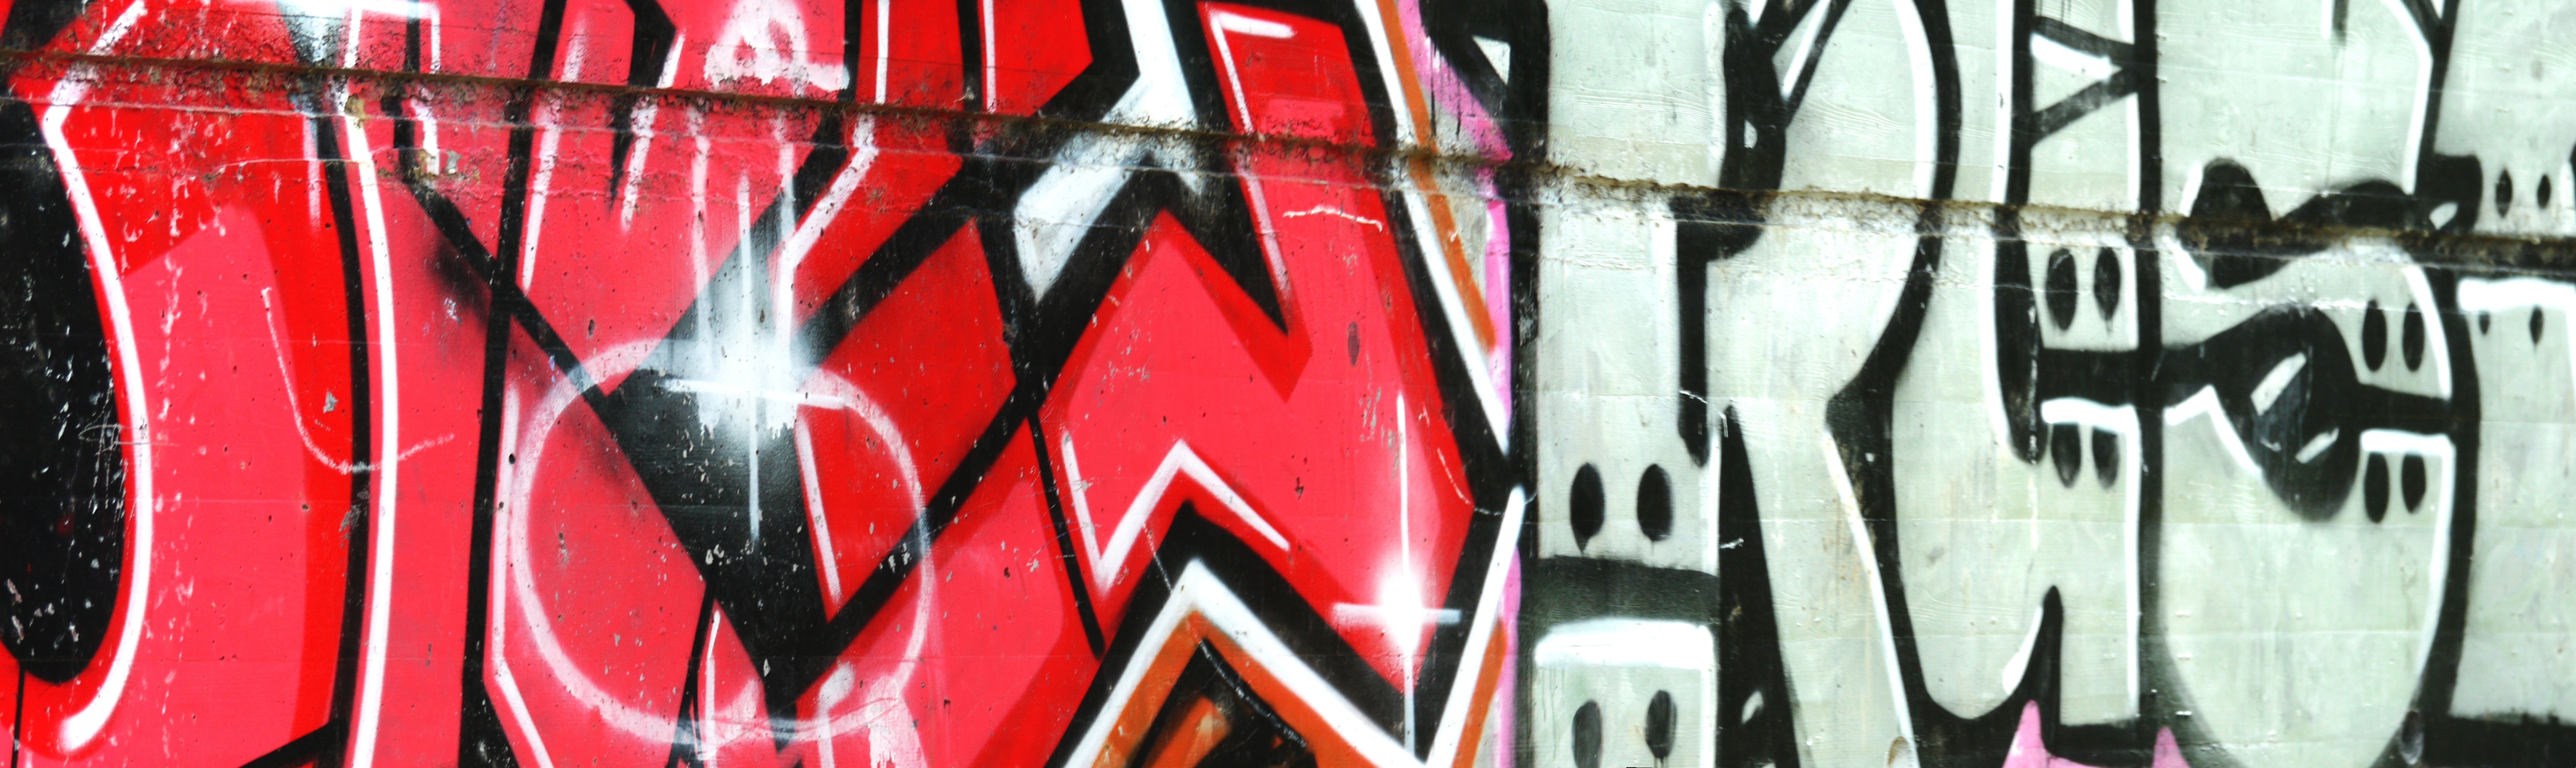 red black and white graffiti painting